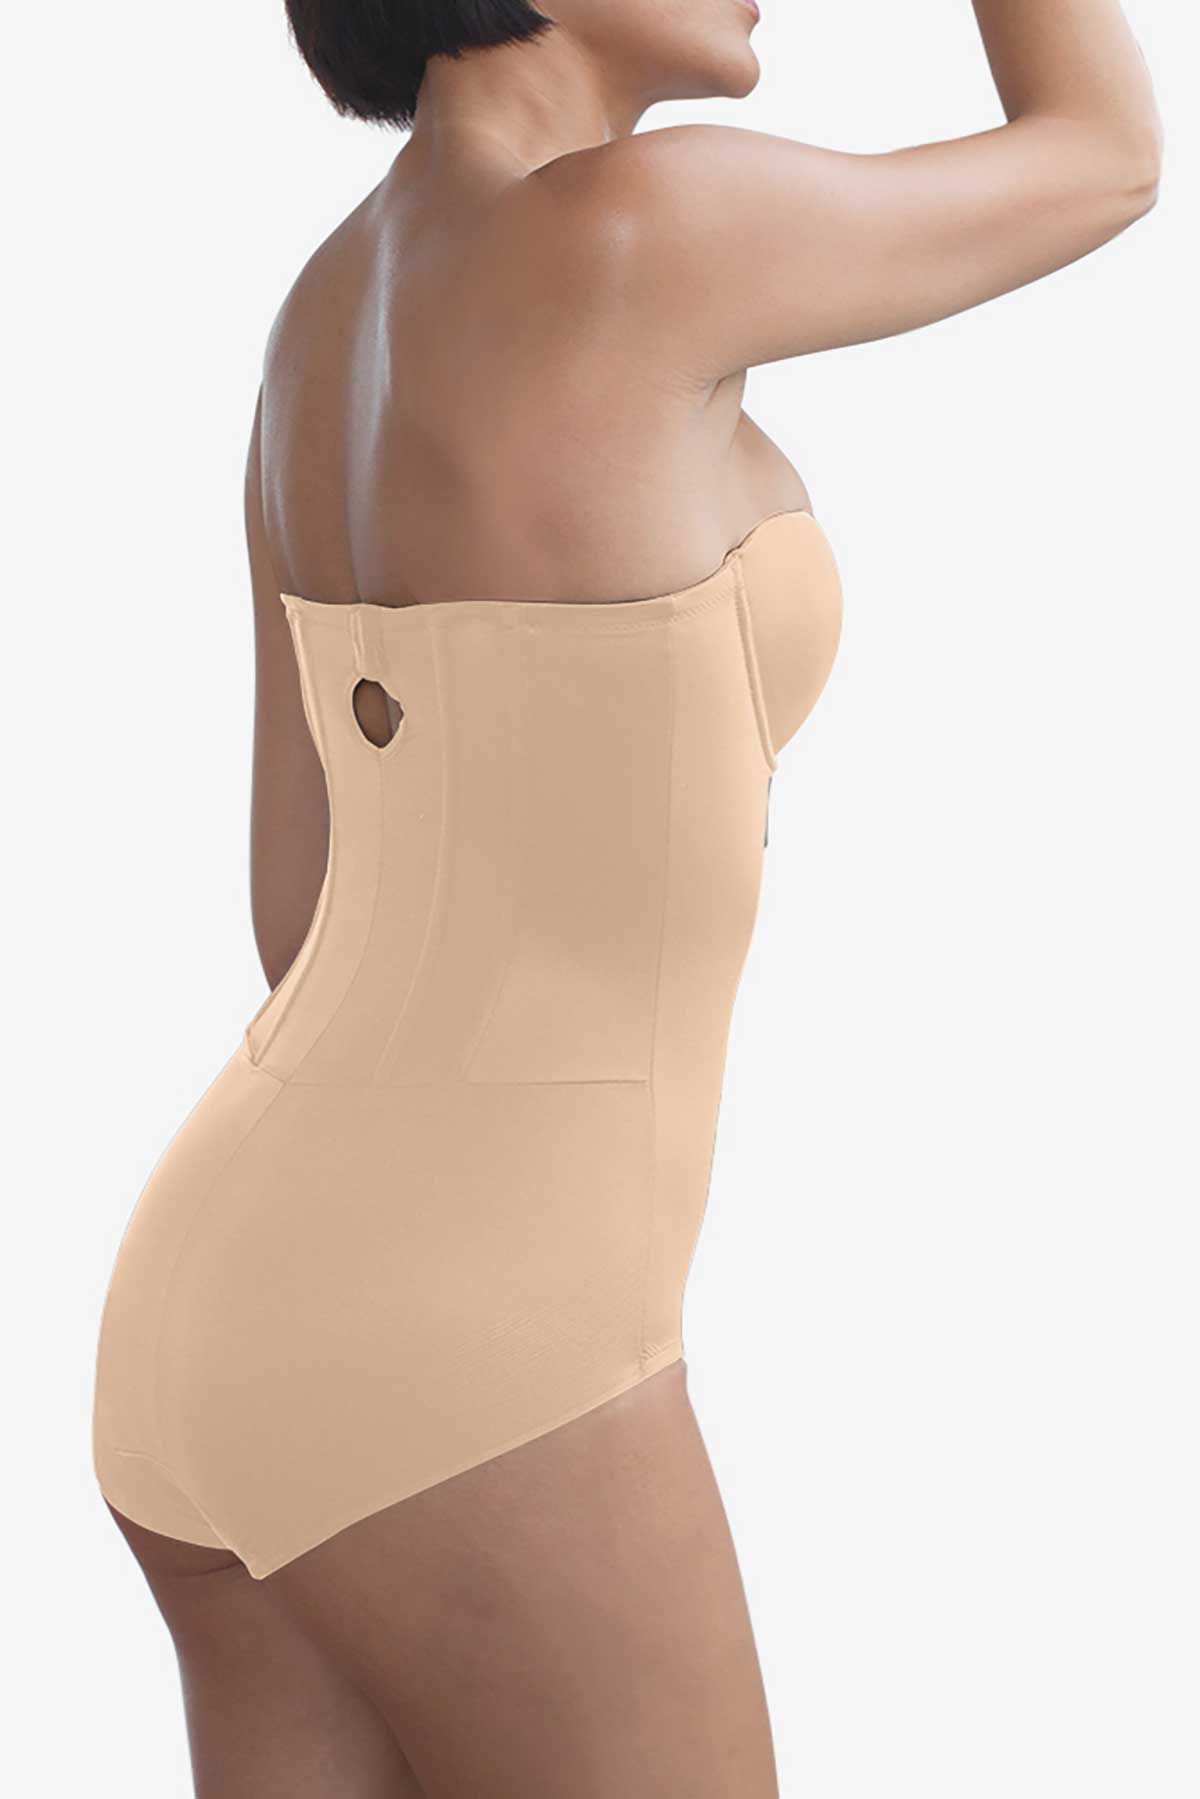 TC FINE INTIMATES Womens Miraclesuit Control Convertible Bodysuit Nude 32DD  £64.90 - PicClick UK